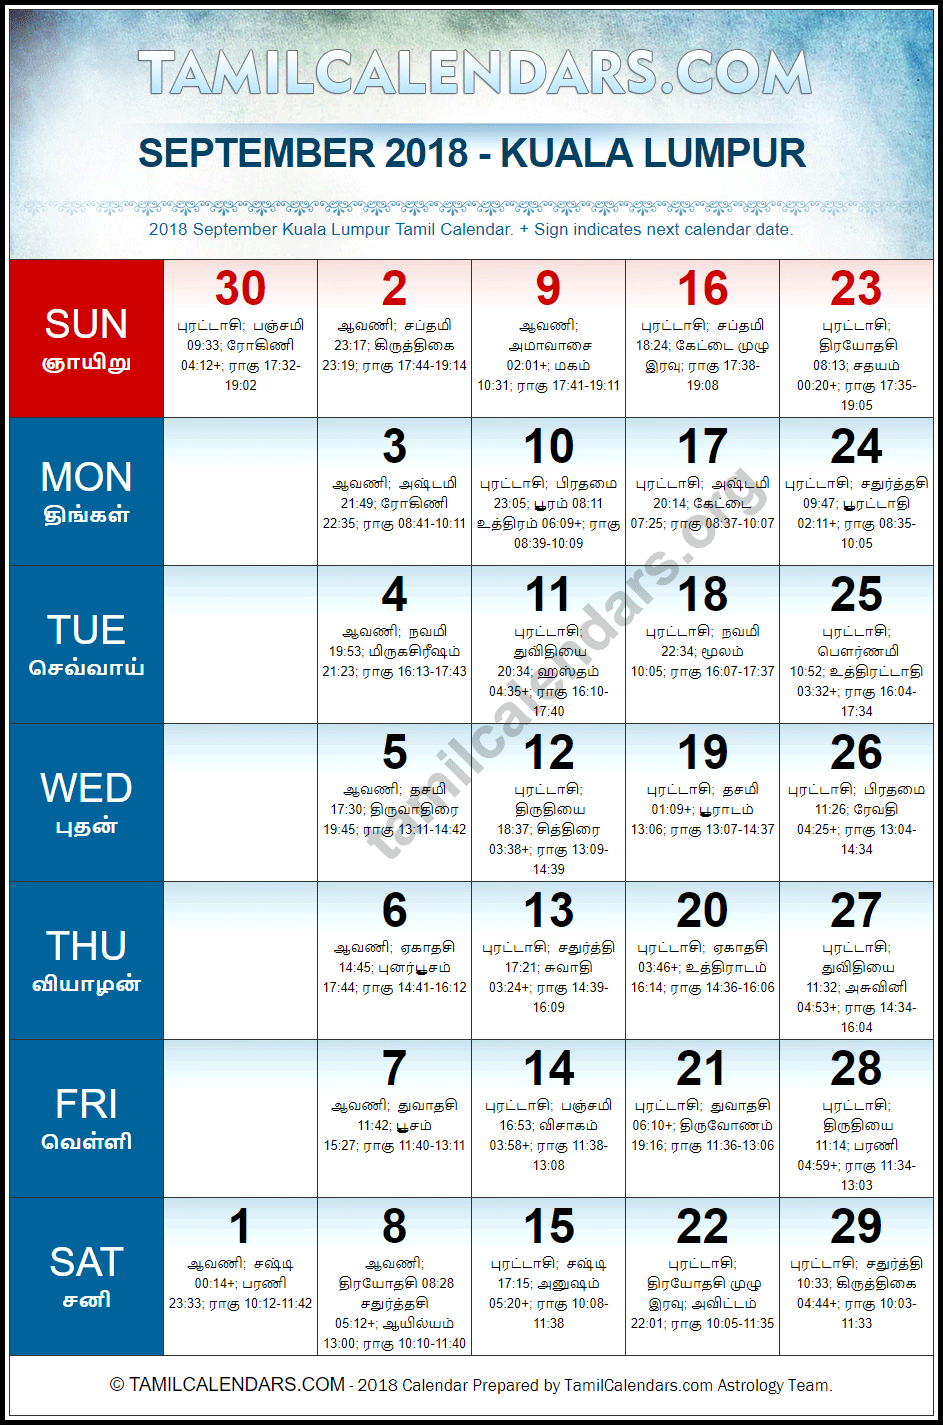 September 2018 Tamil Calendar for Malaysia (Kuala Lumpur)